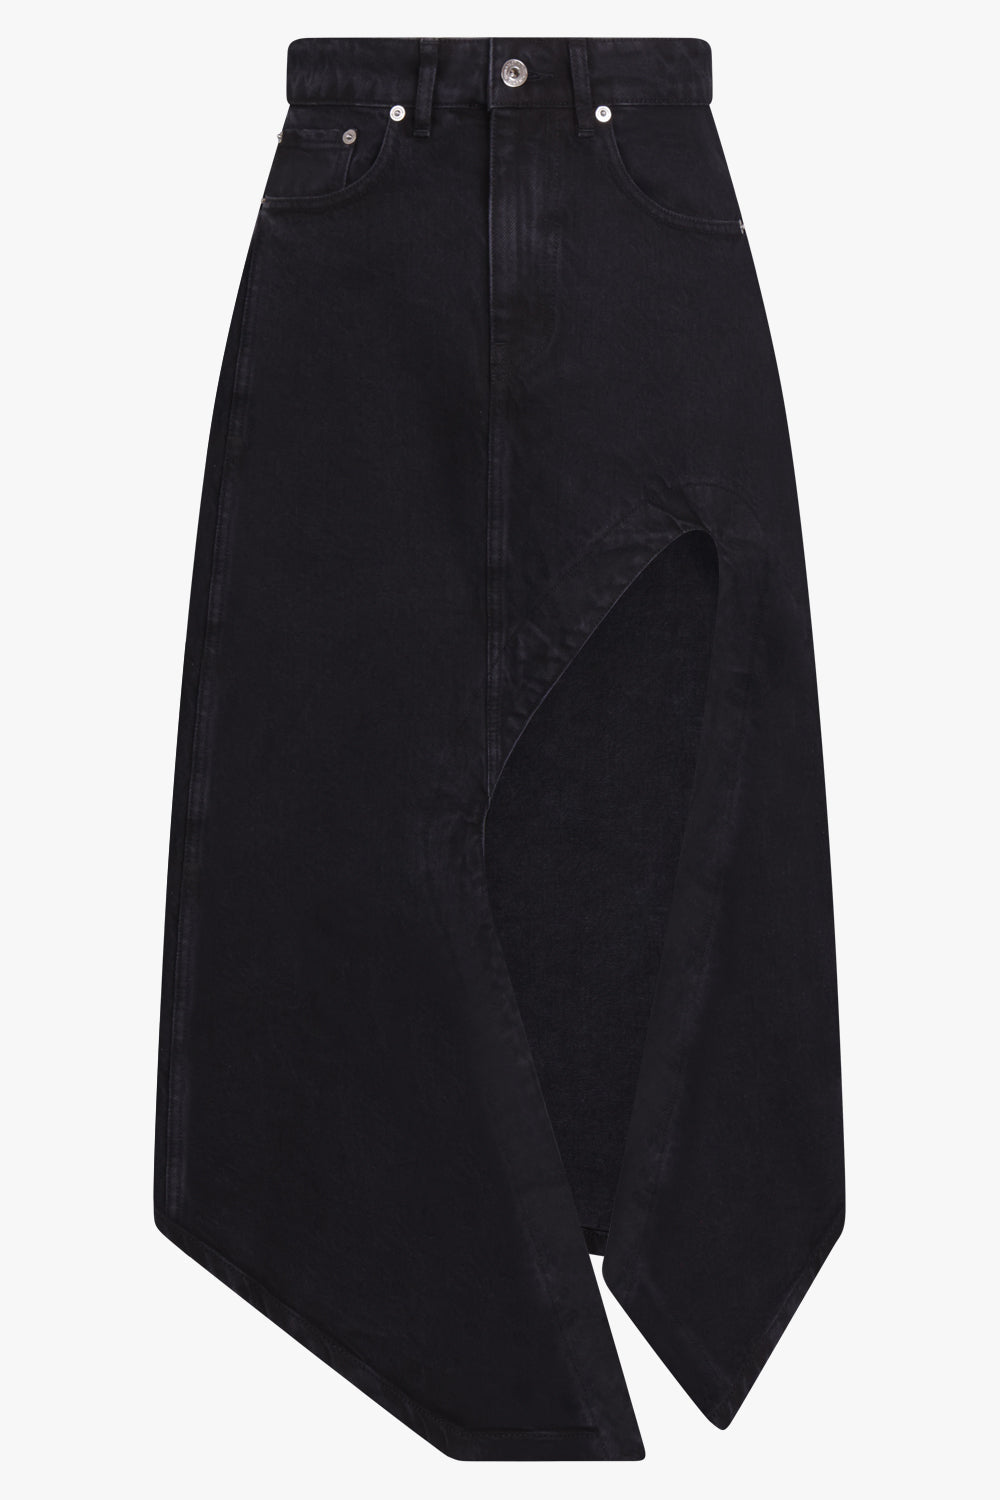 Y/PROJECT RTW Cut Out Denim Skirt | Evergreen Black